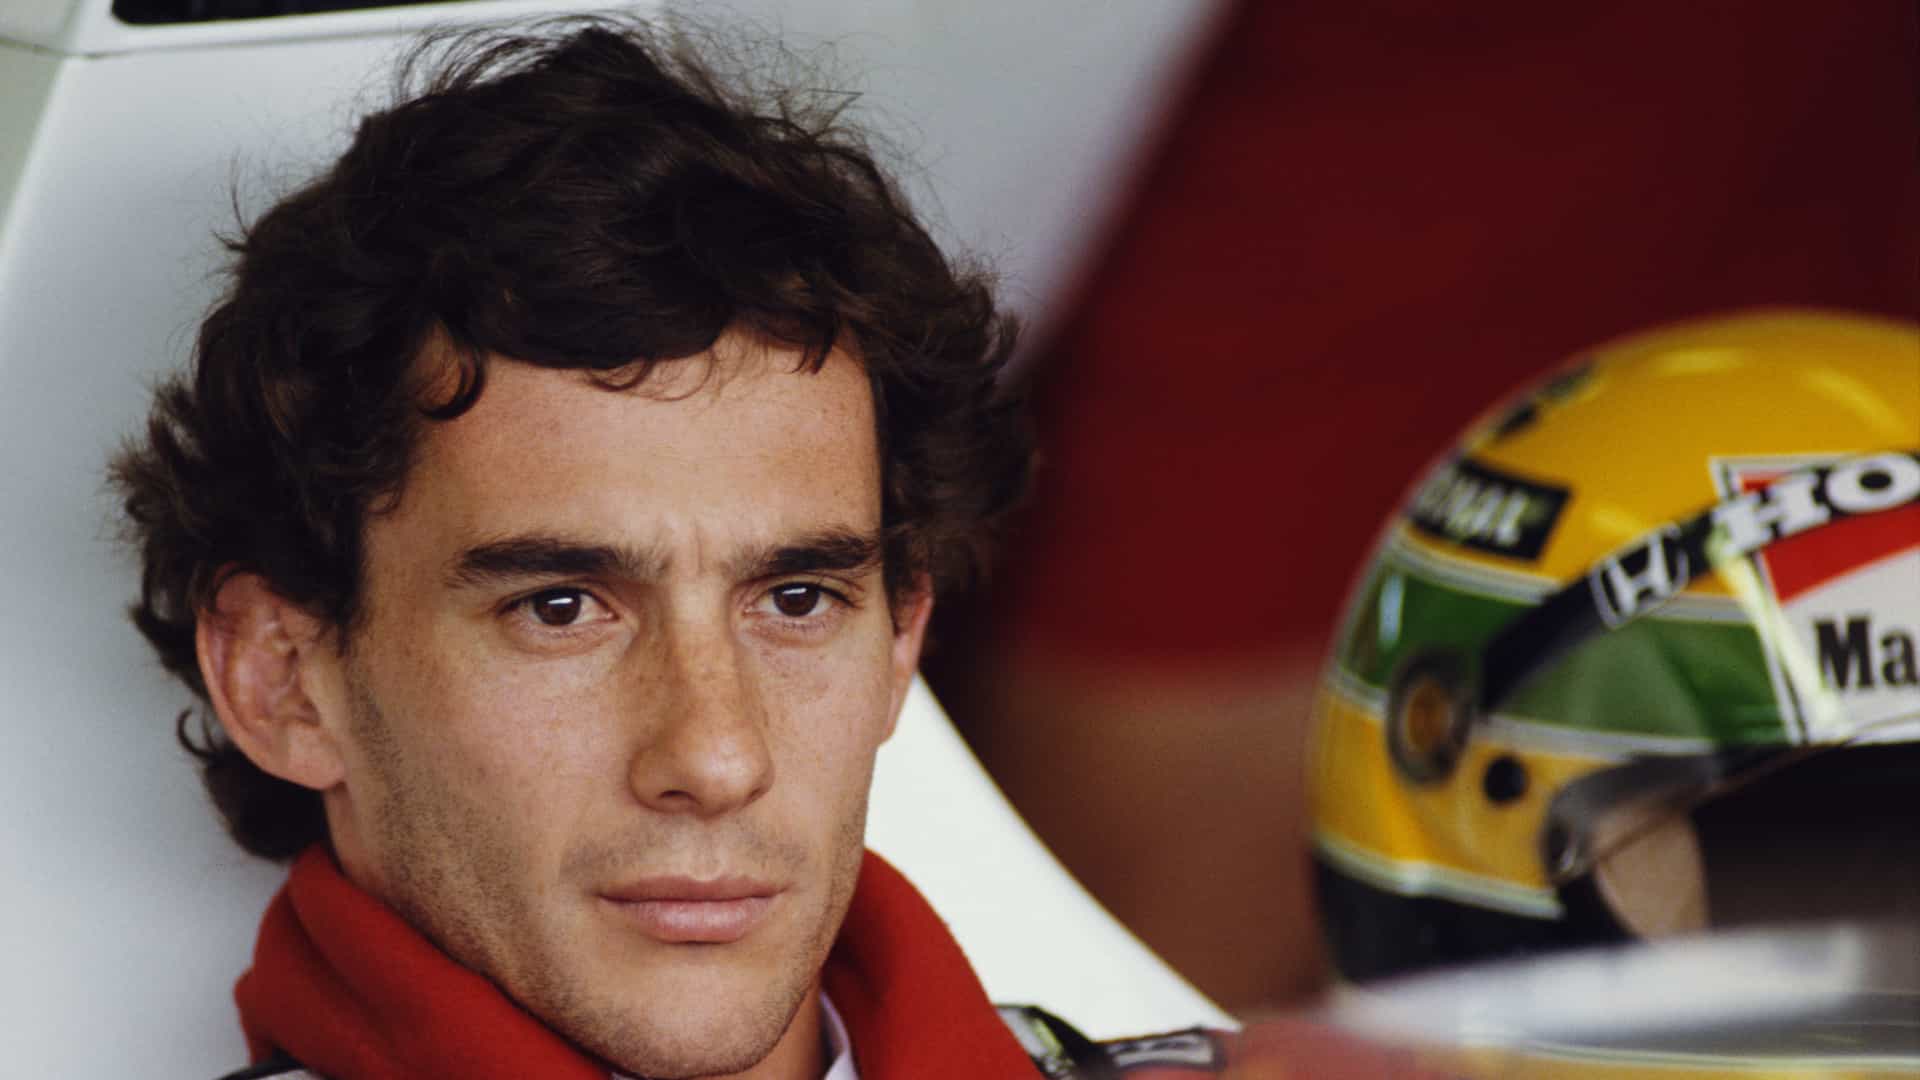 Airton Senna